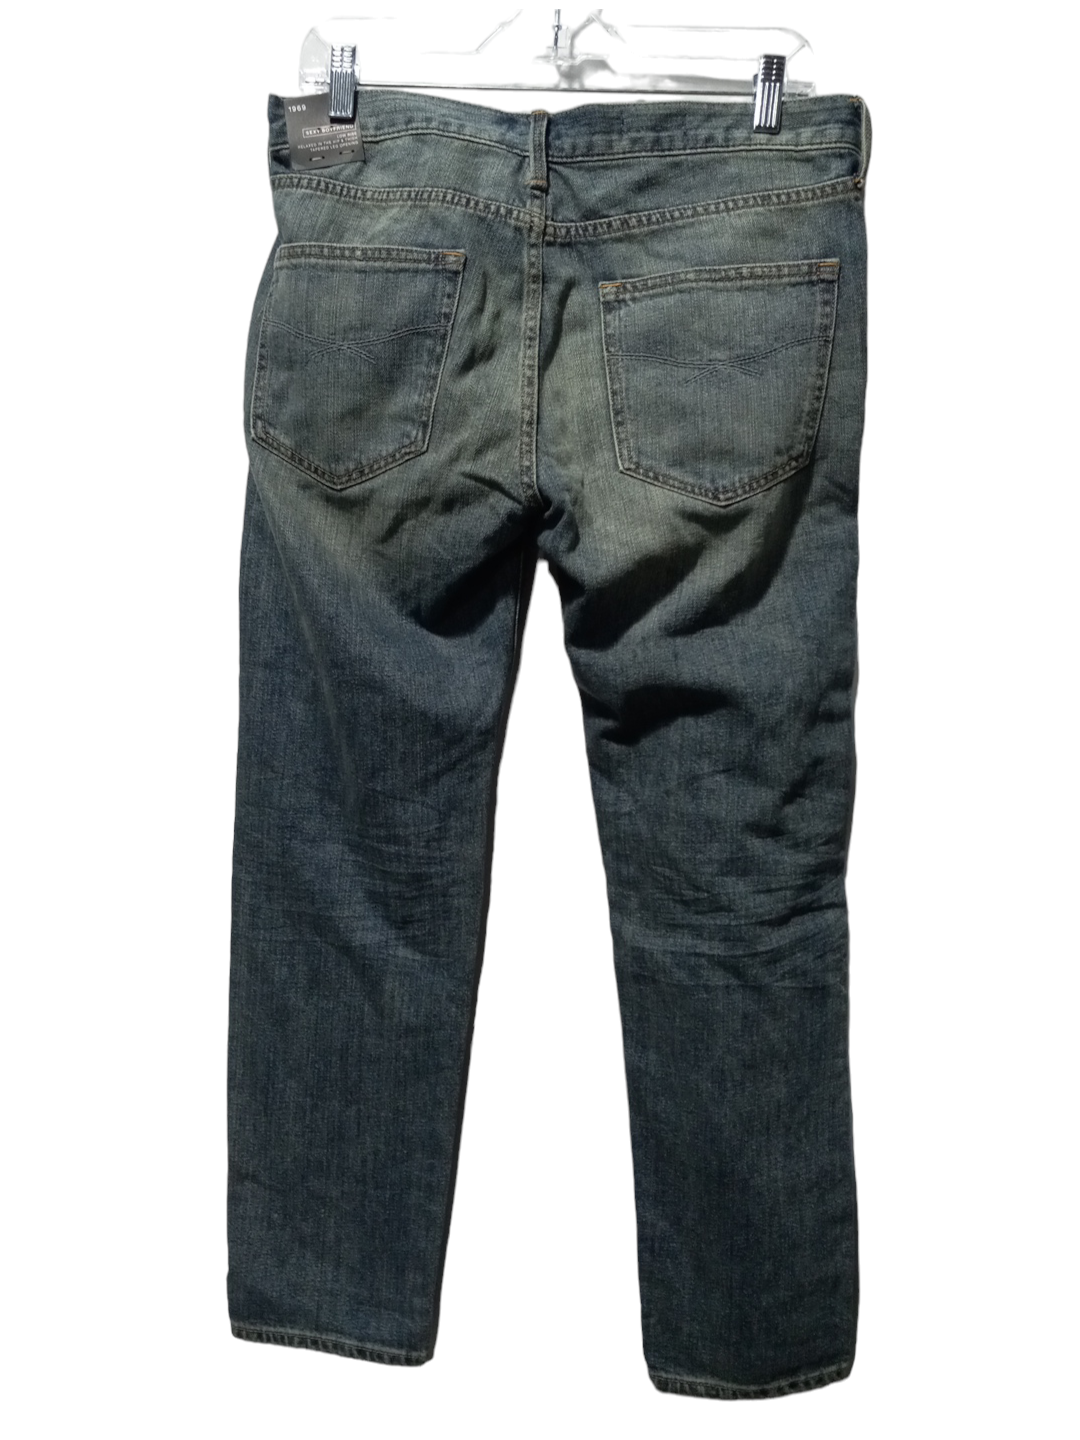 Blue Denim Jeans Boyfriend Gap, Size 4